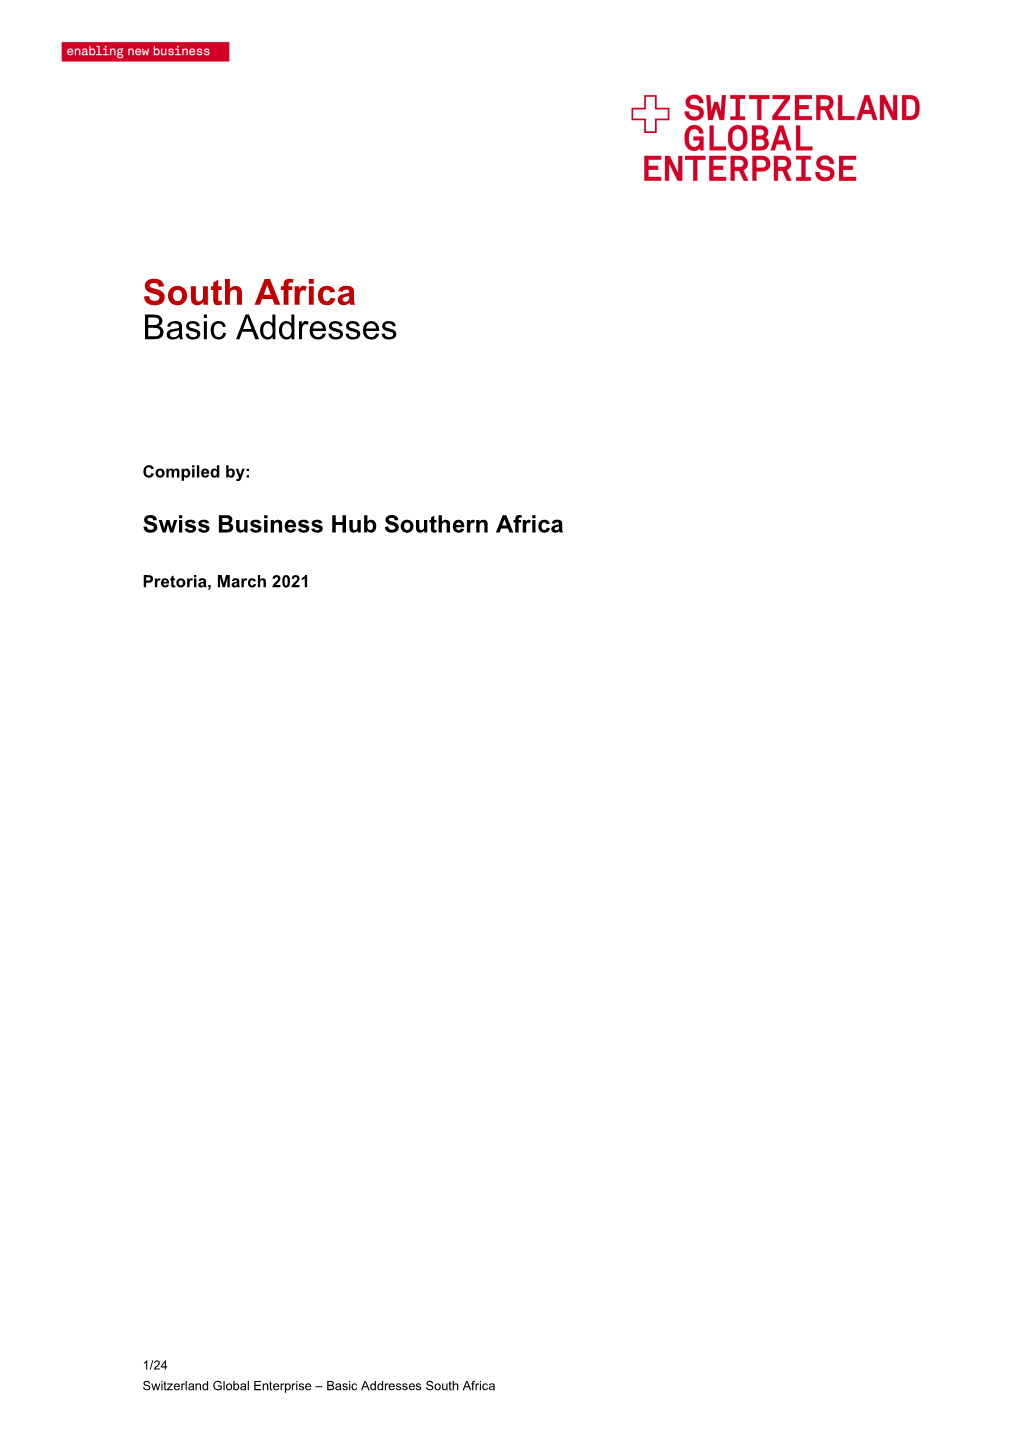 South Africa Basic Addresses